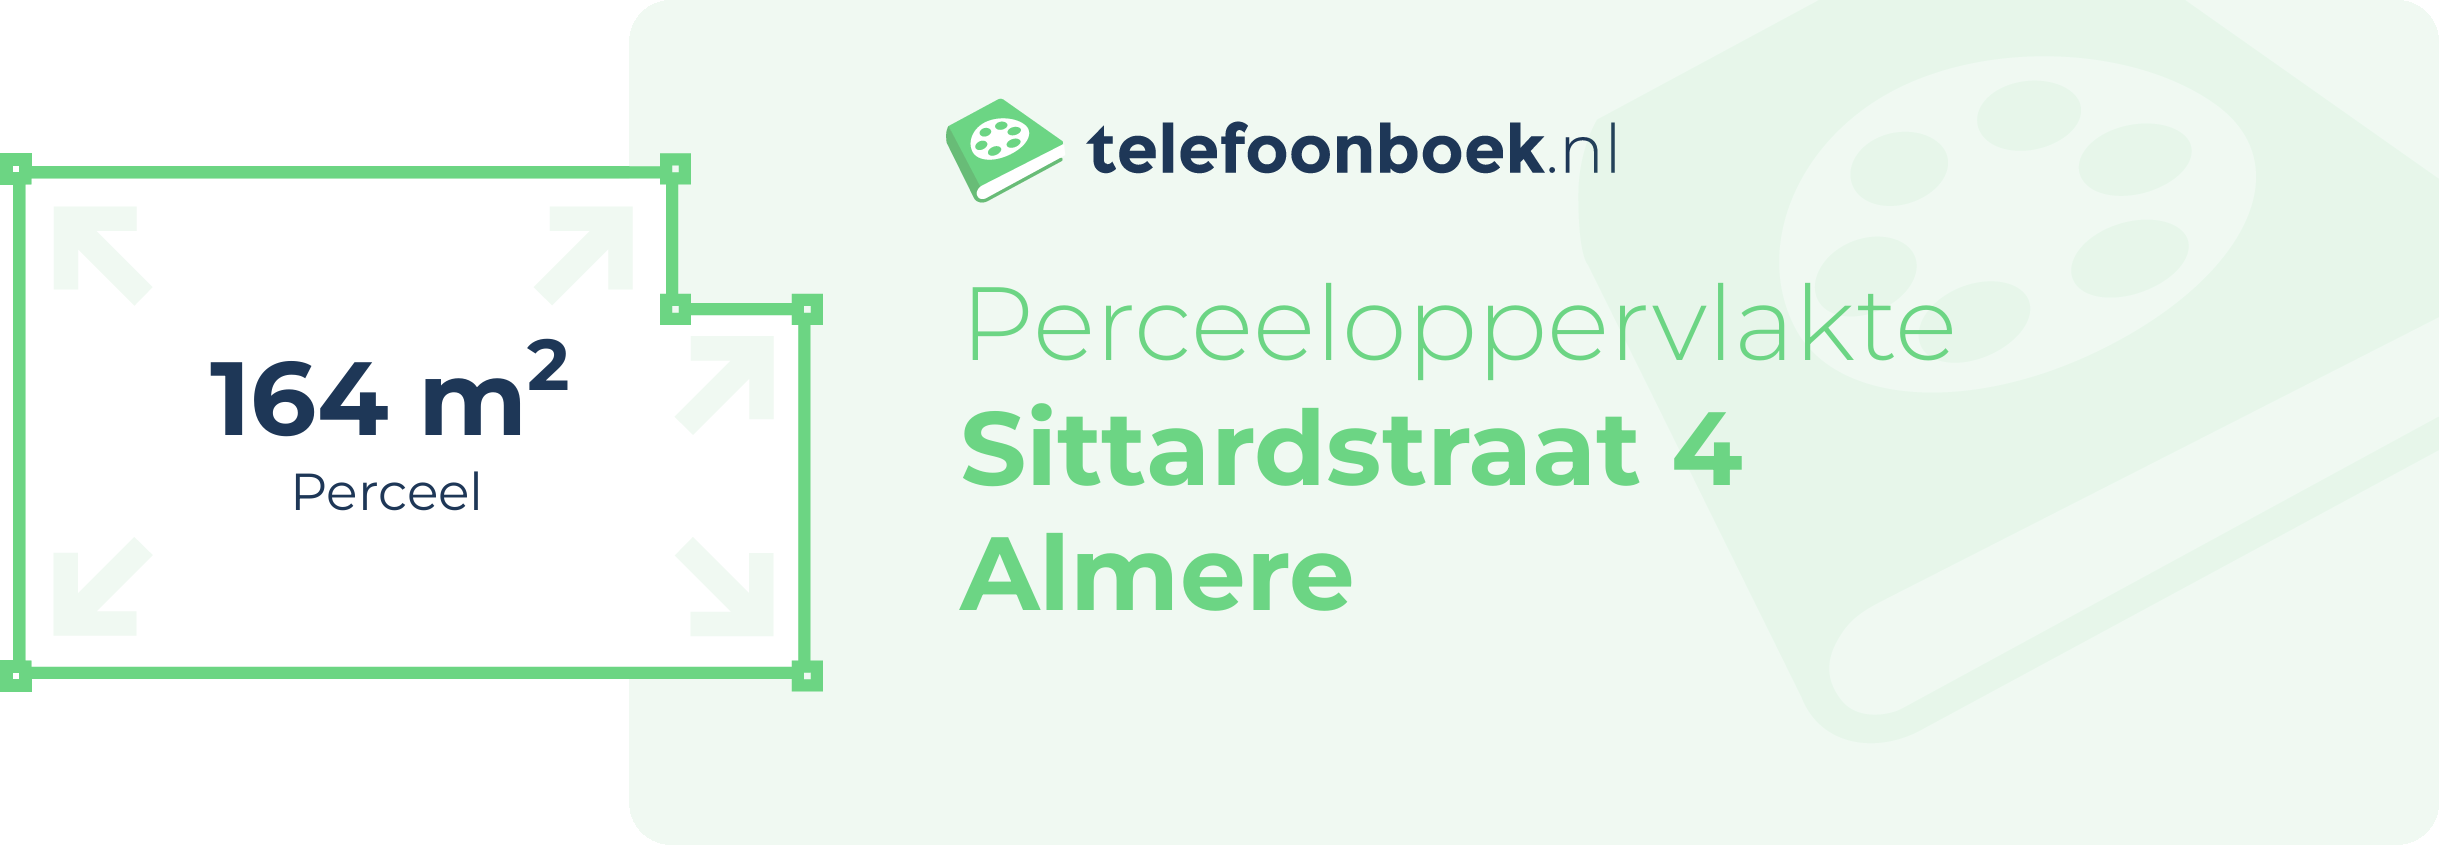 Perceeloppervlakte Sittardstraat 4 Almere